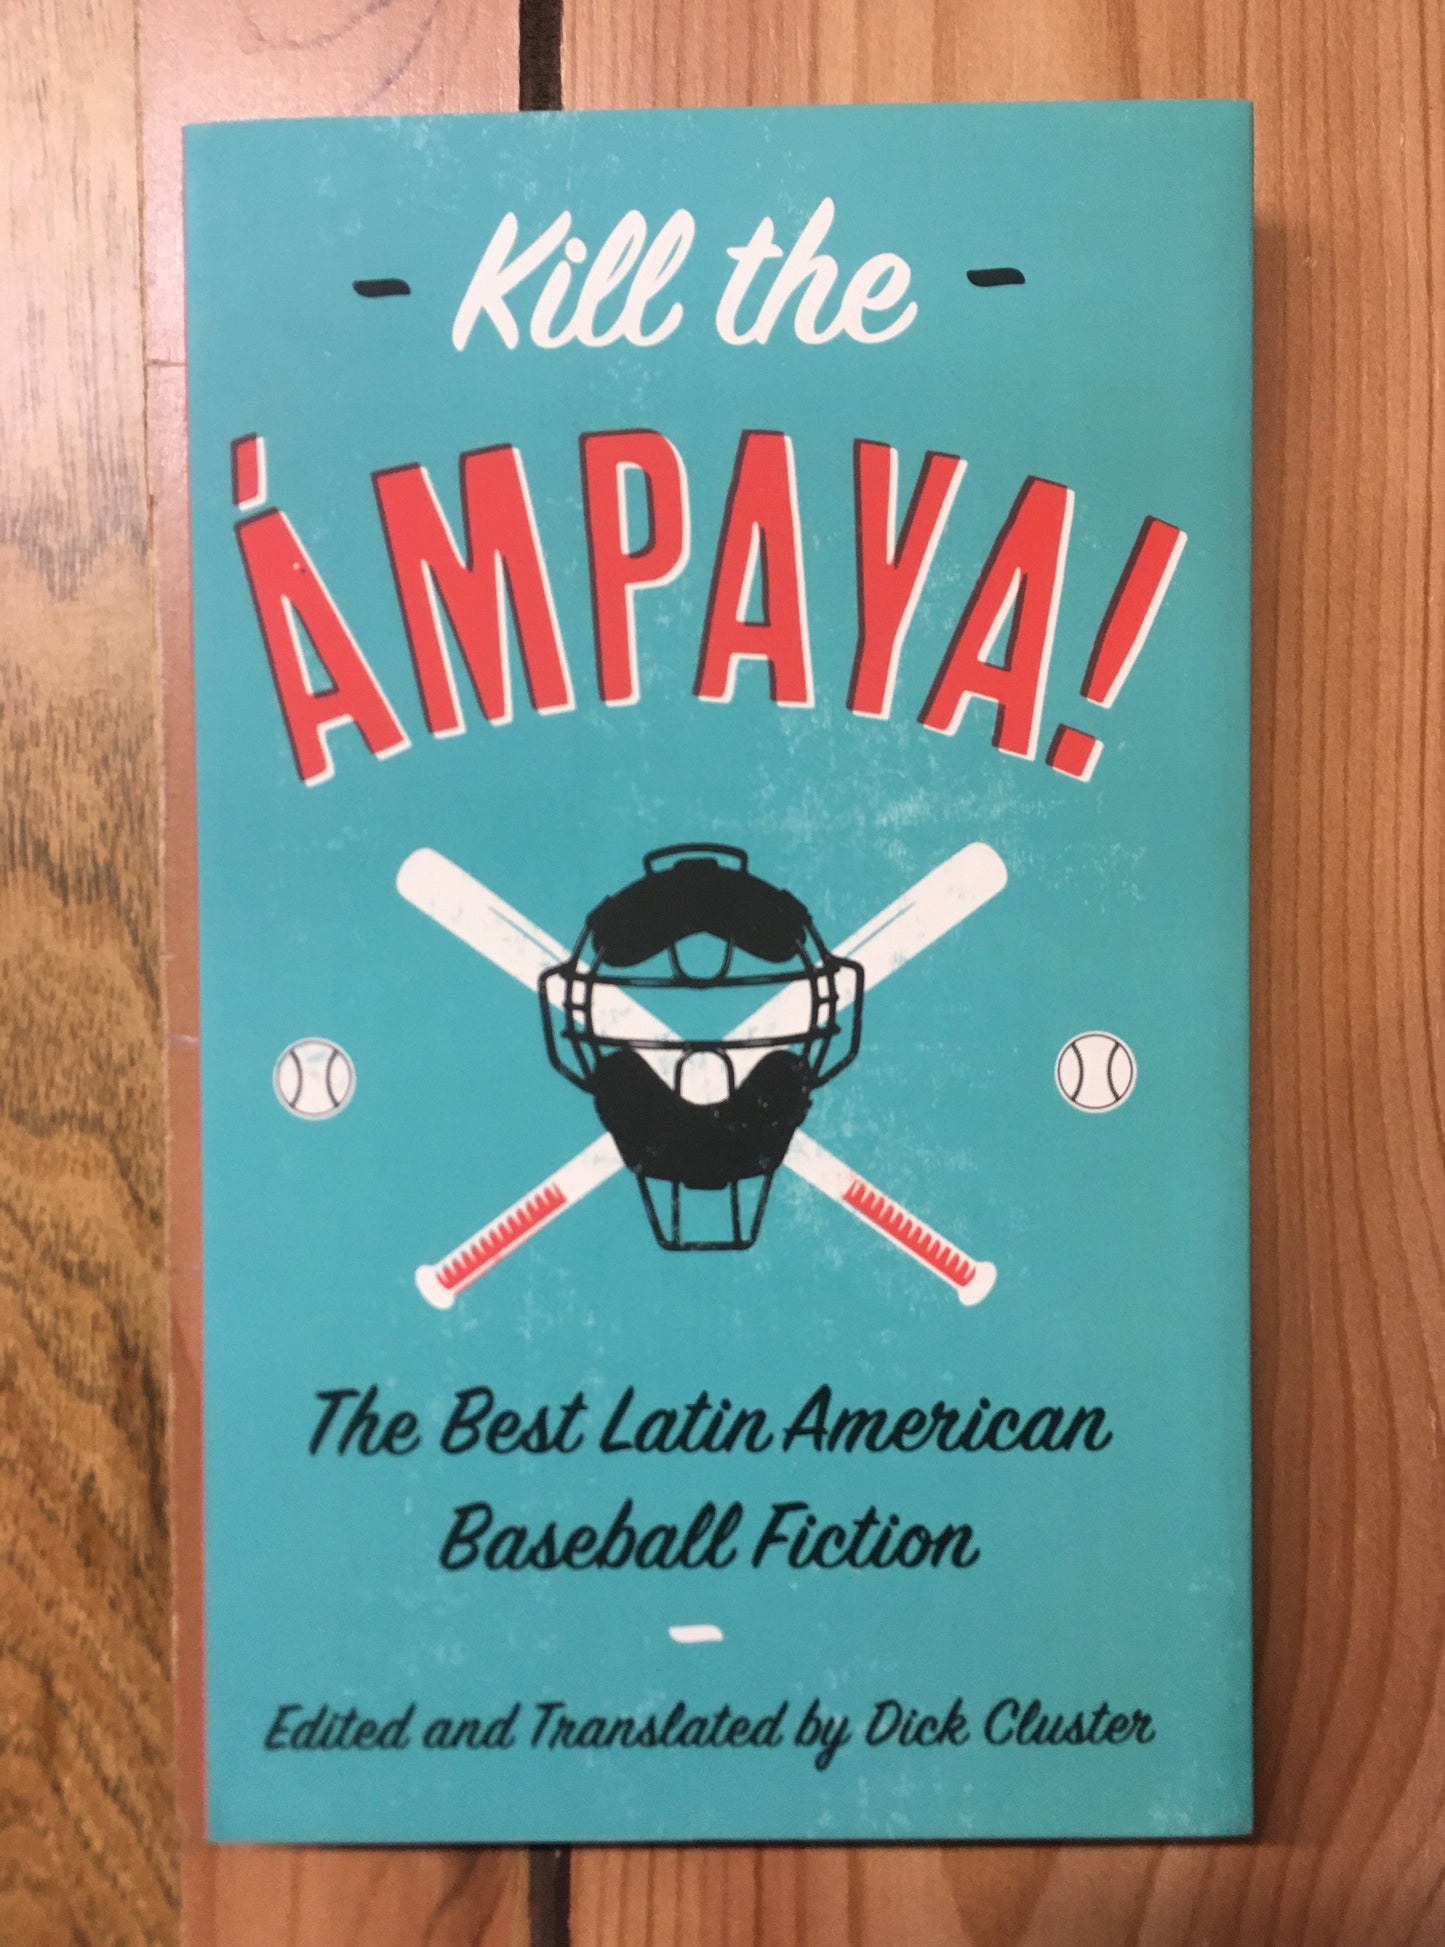 Kill the Ampaya! The Best Latin American Baseball Fiction